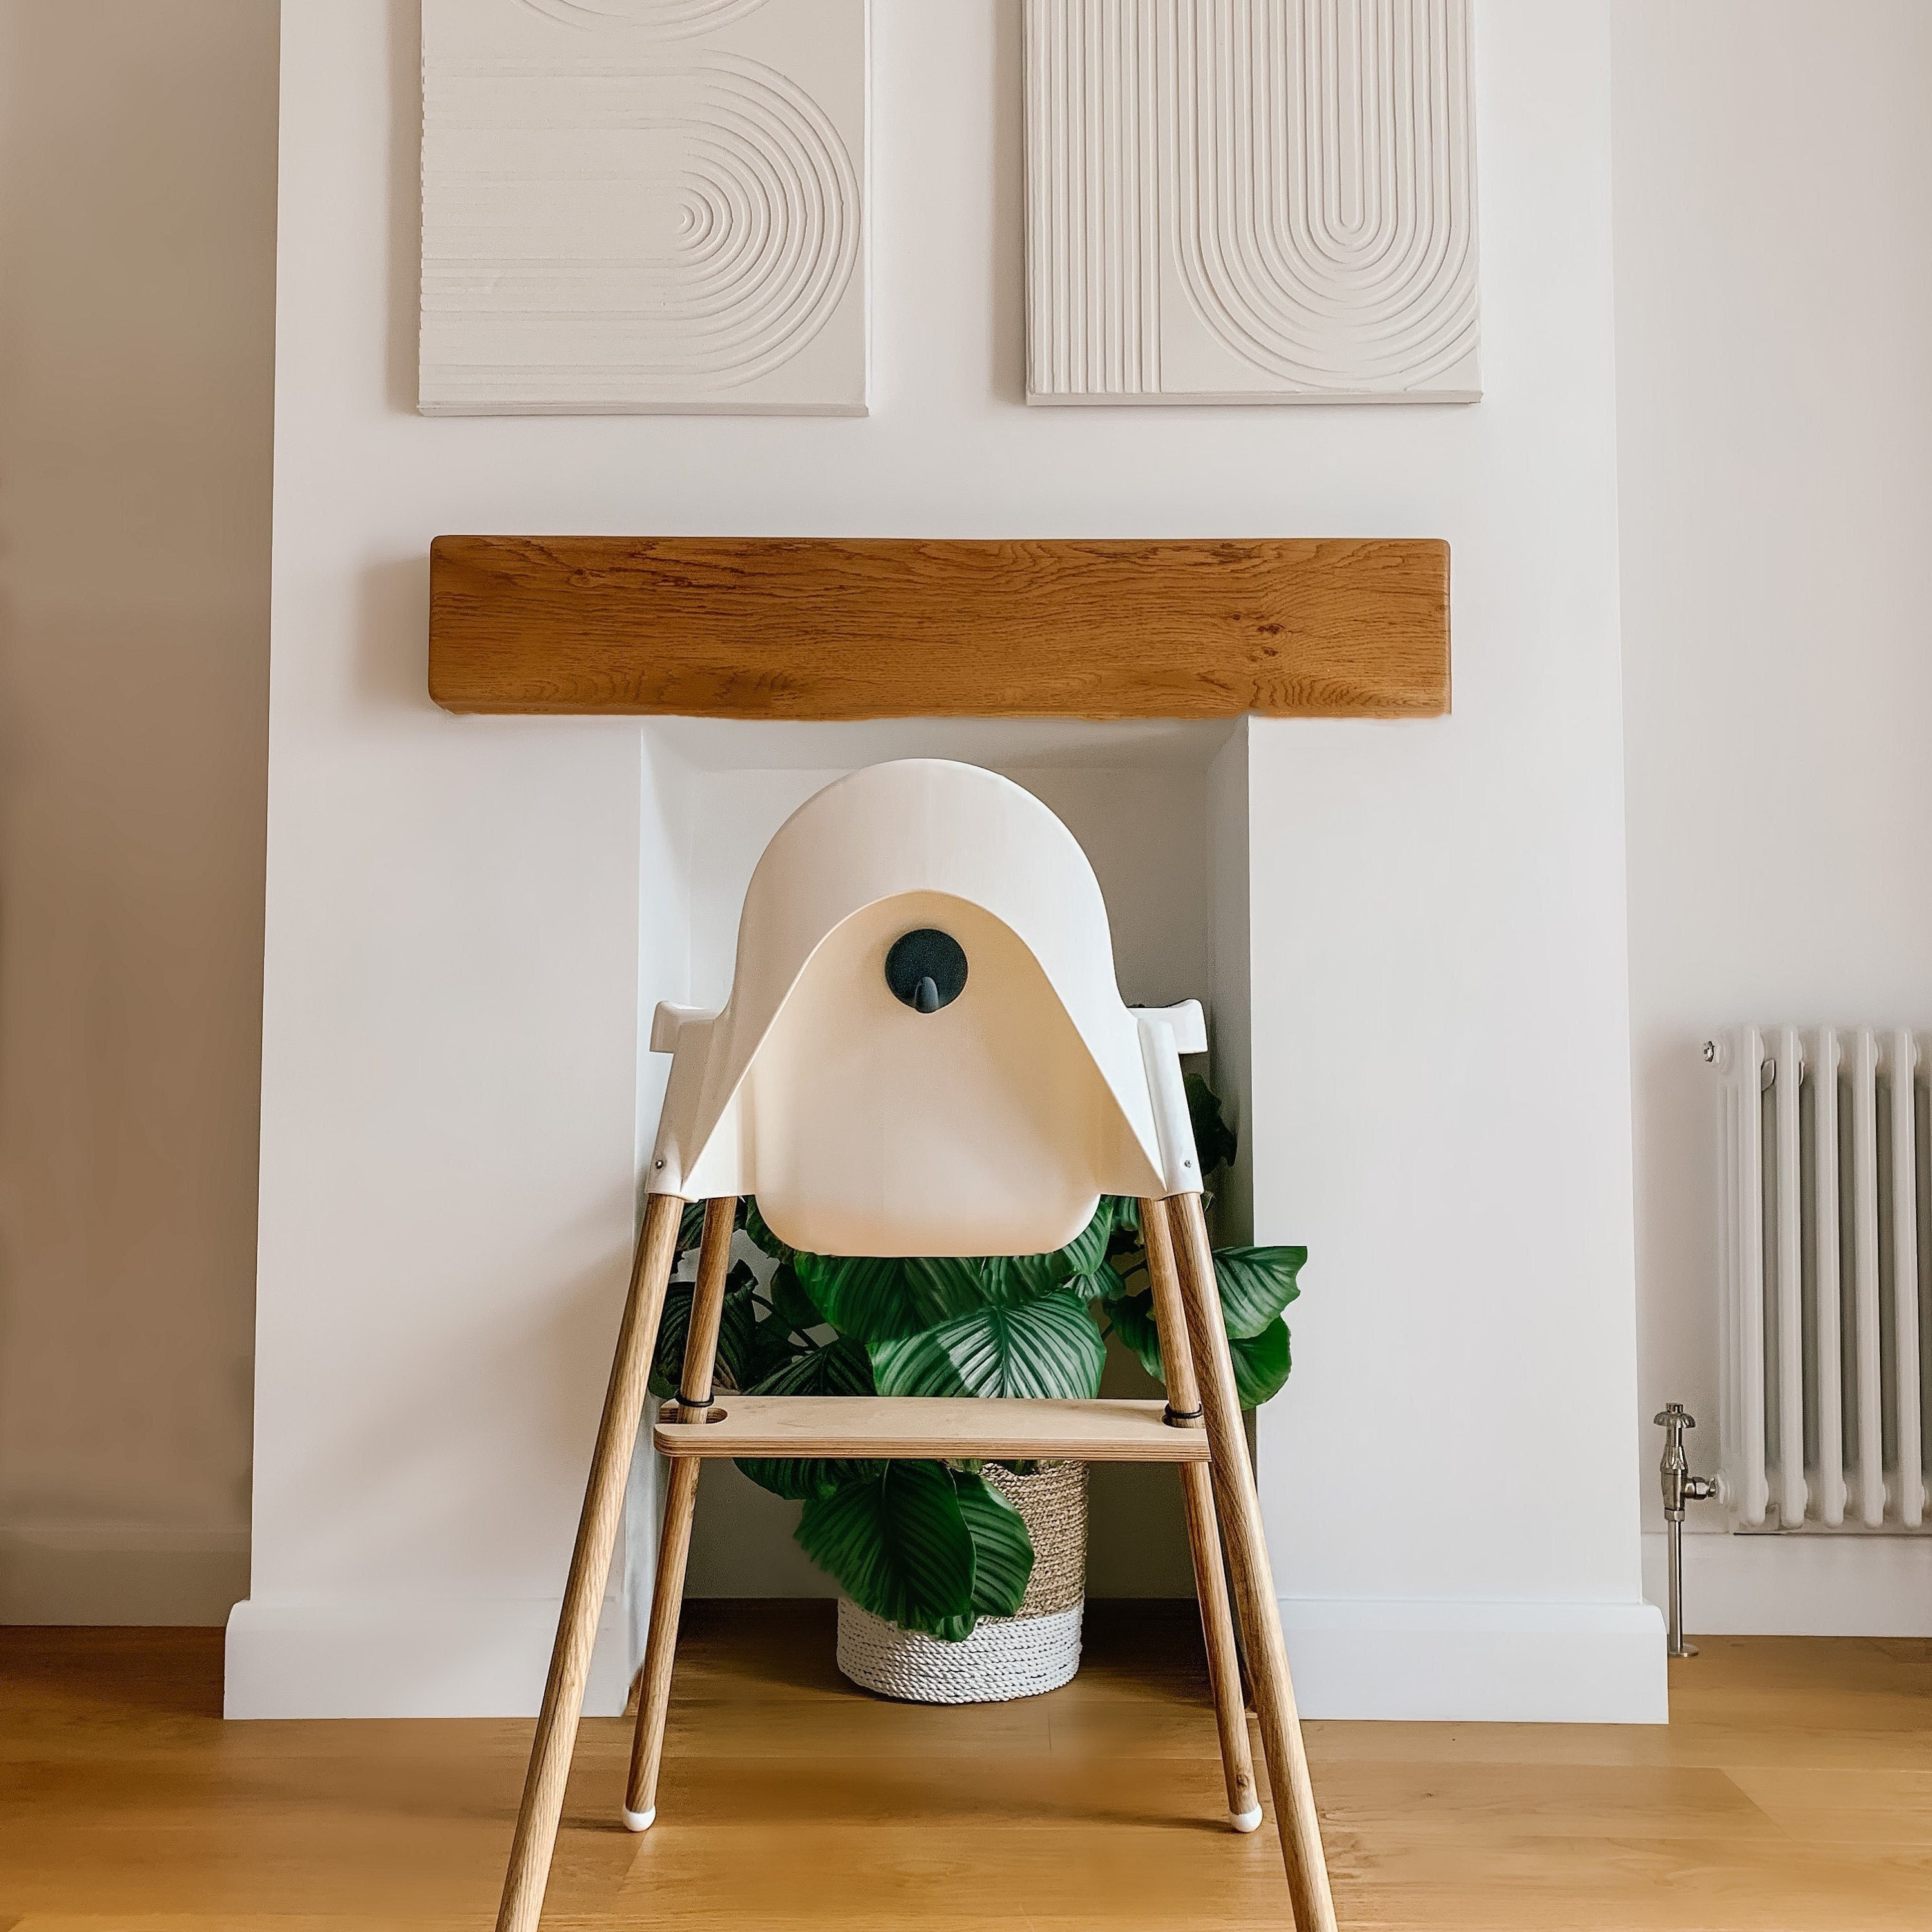 Baby Hacks: Ikea Antilop High Chair – 9mamas